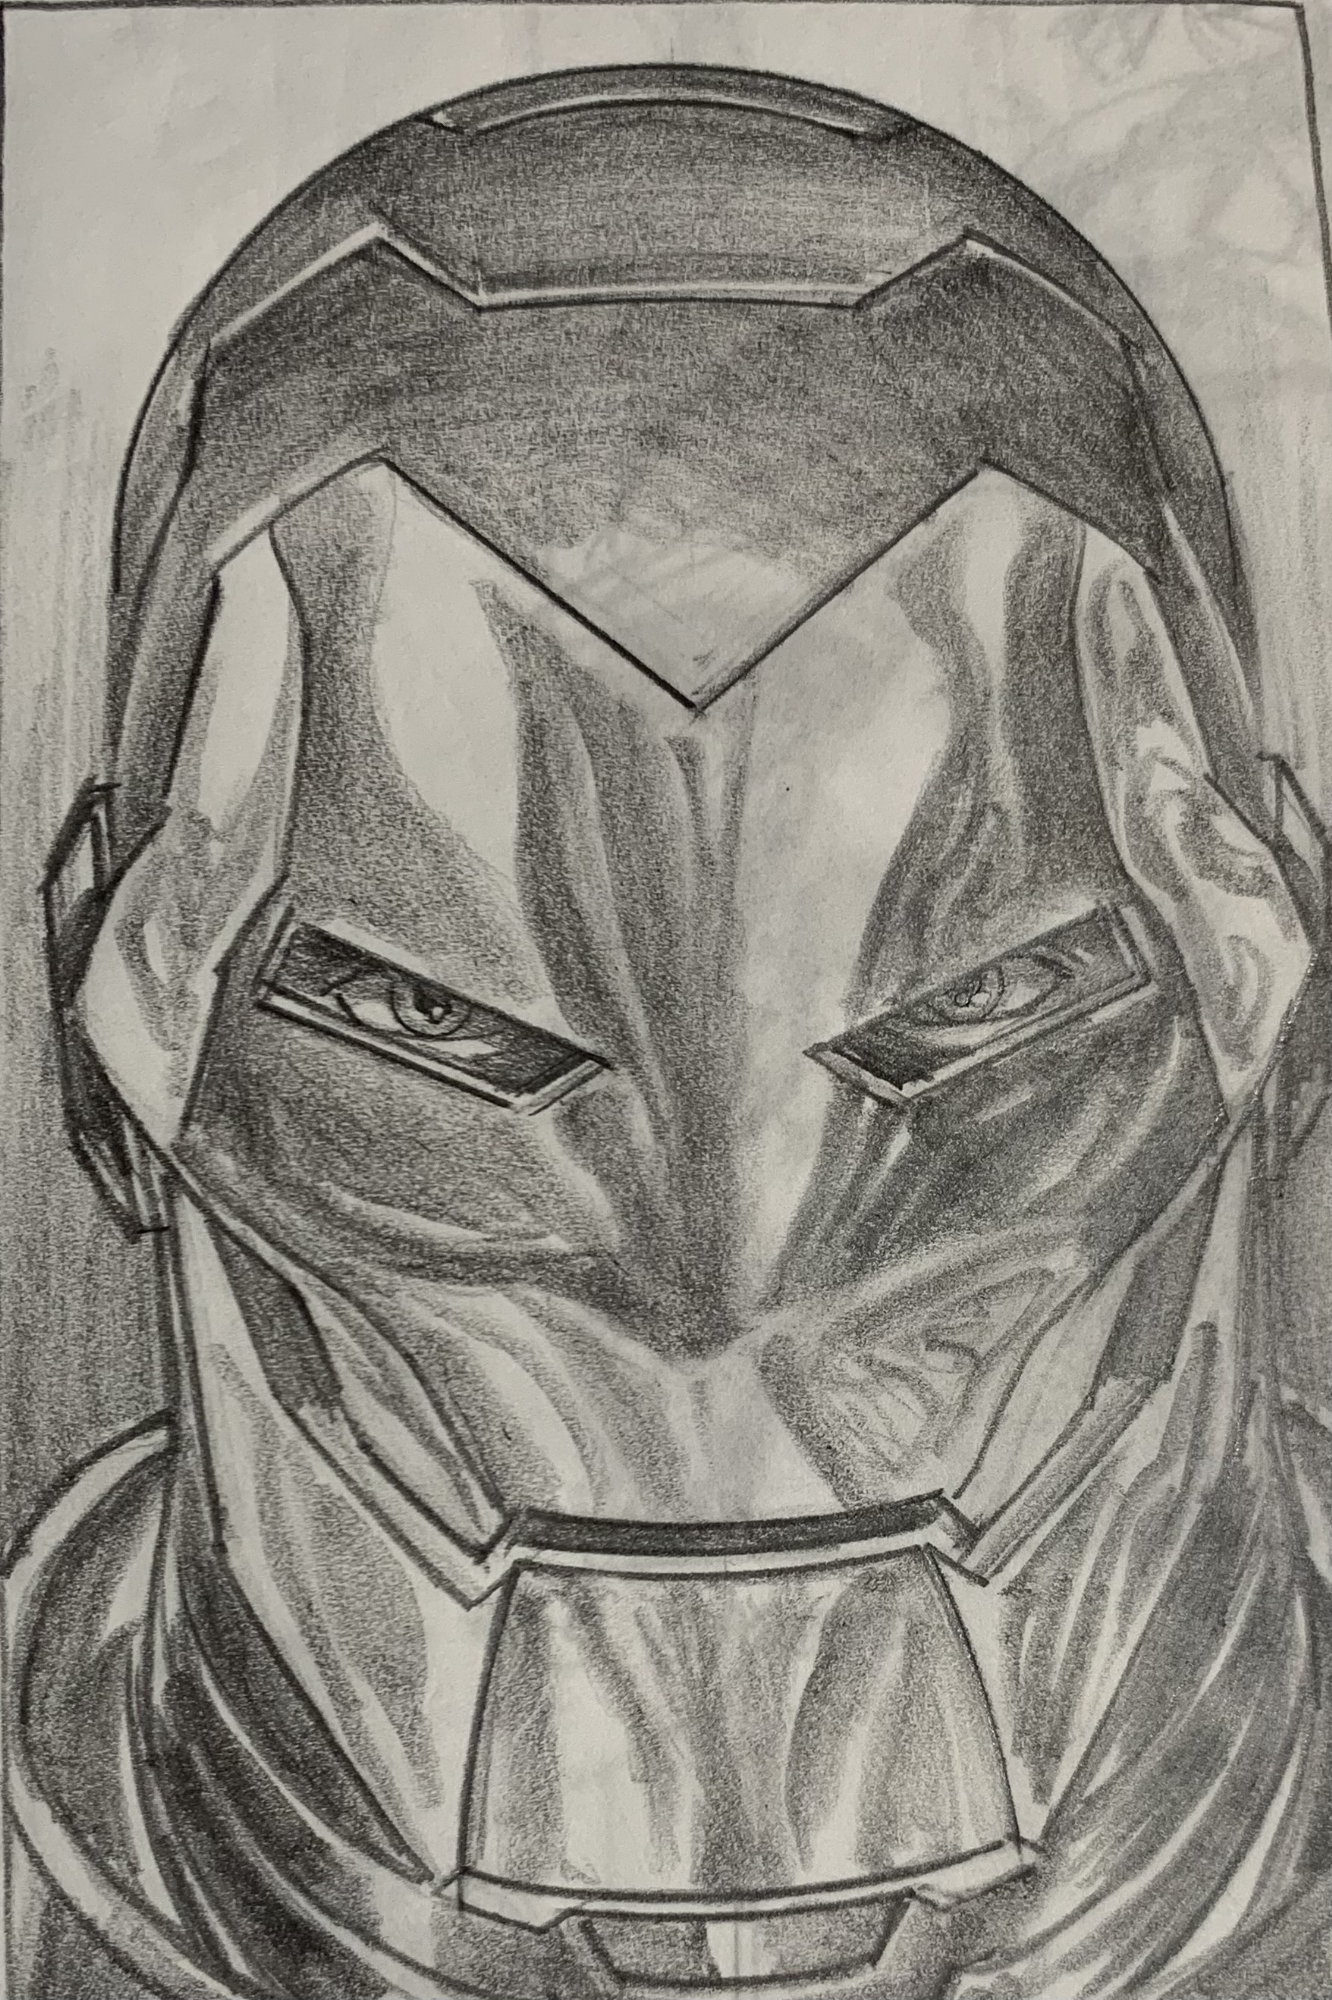 ArtStation - Iron man sketch